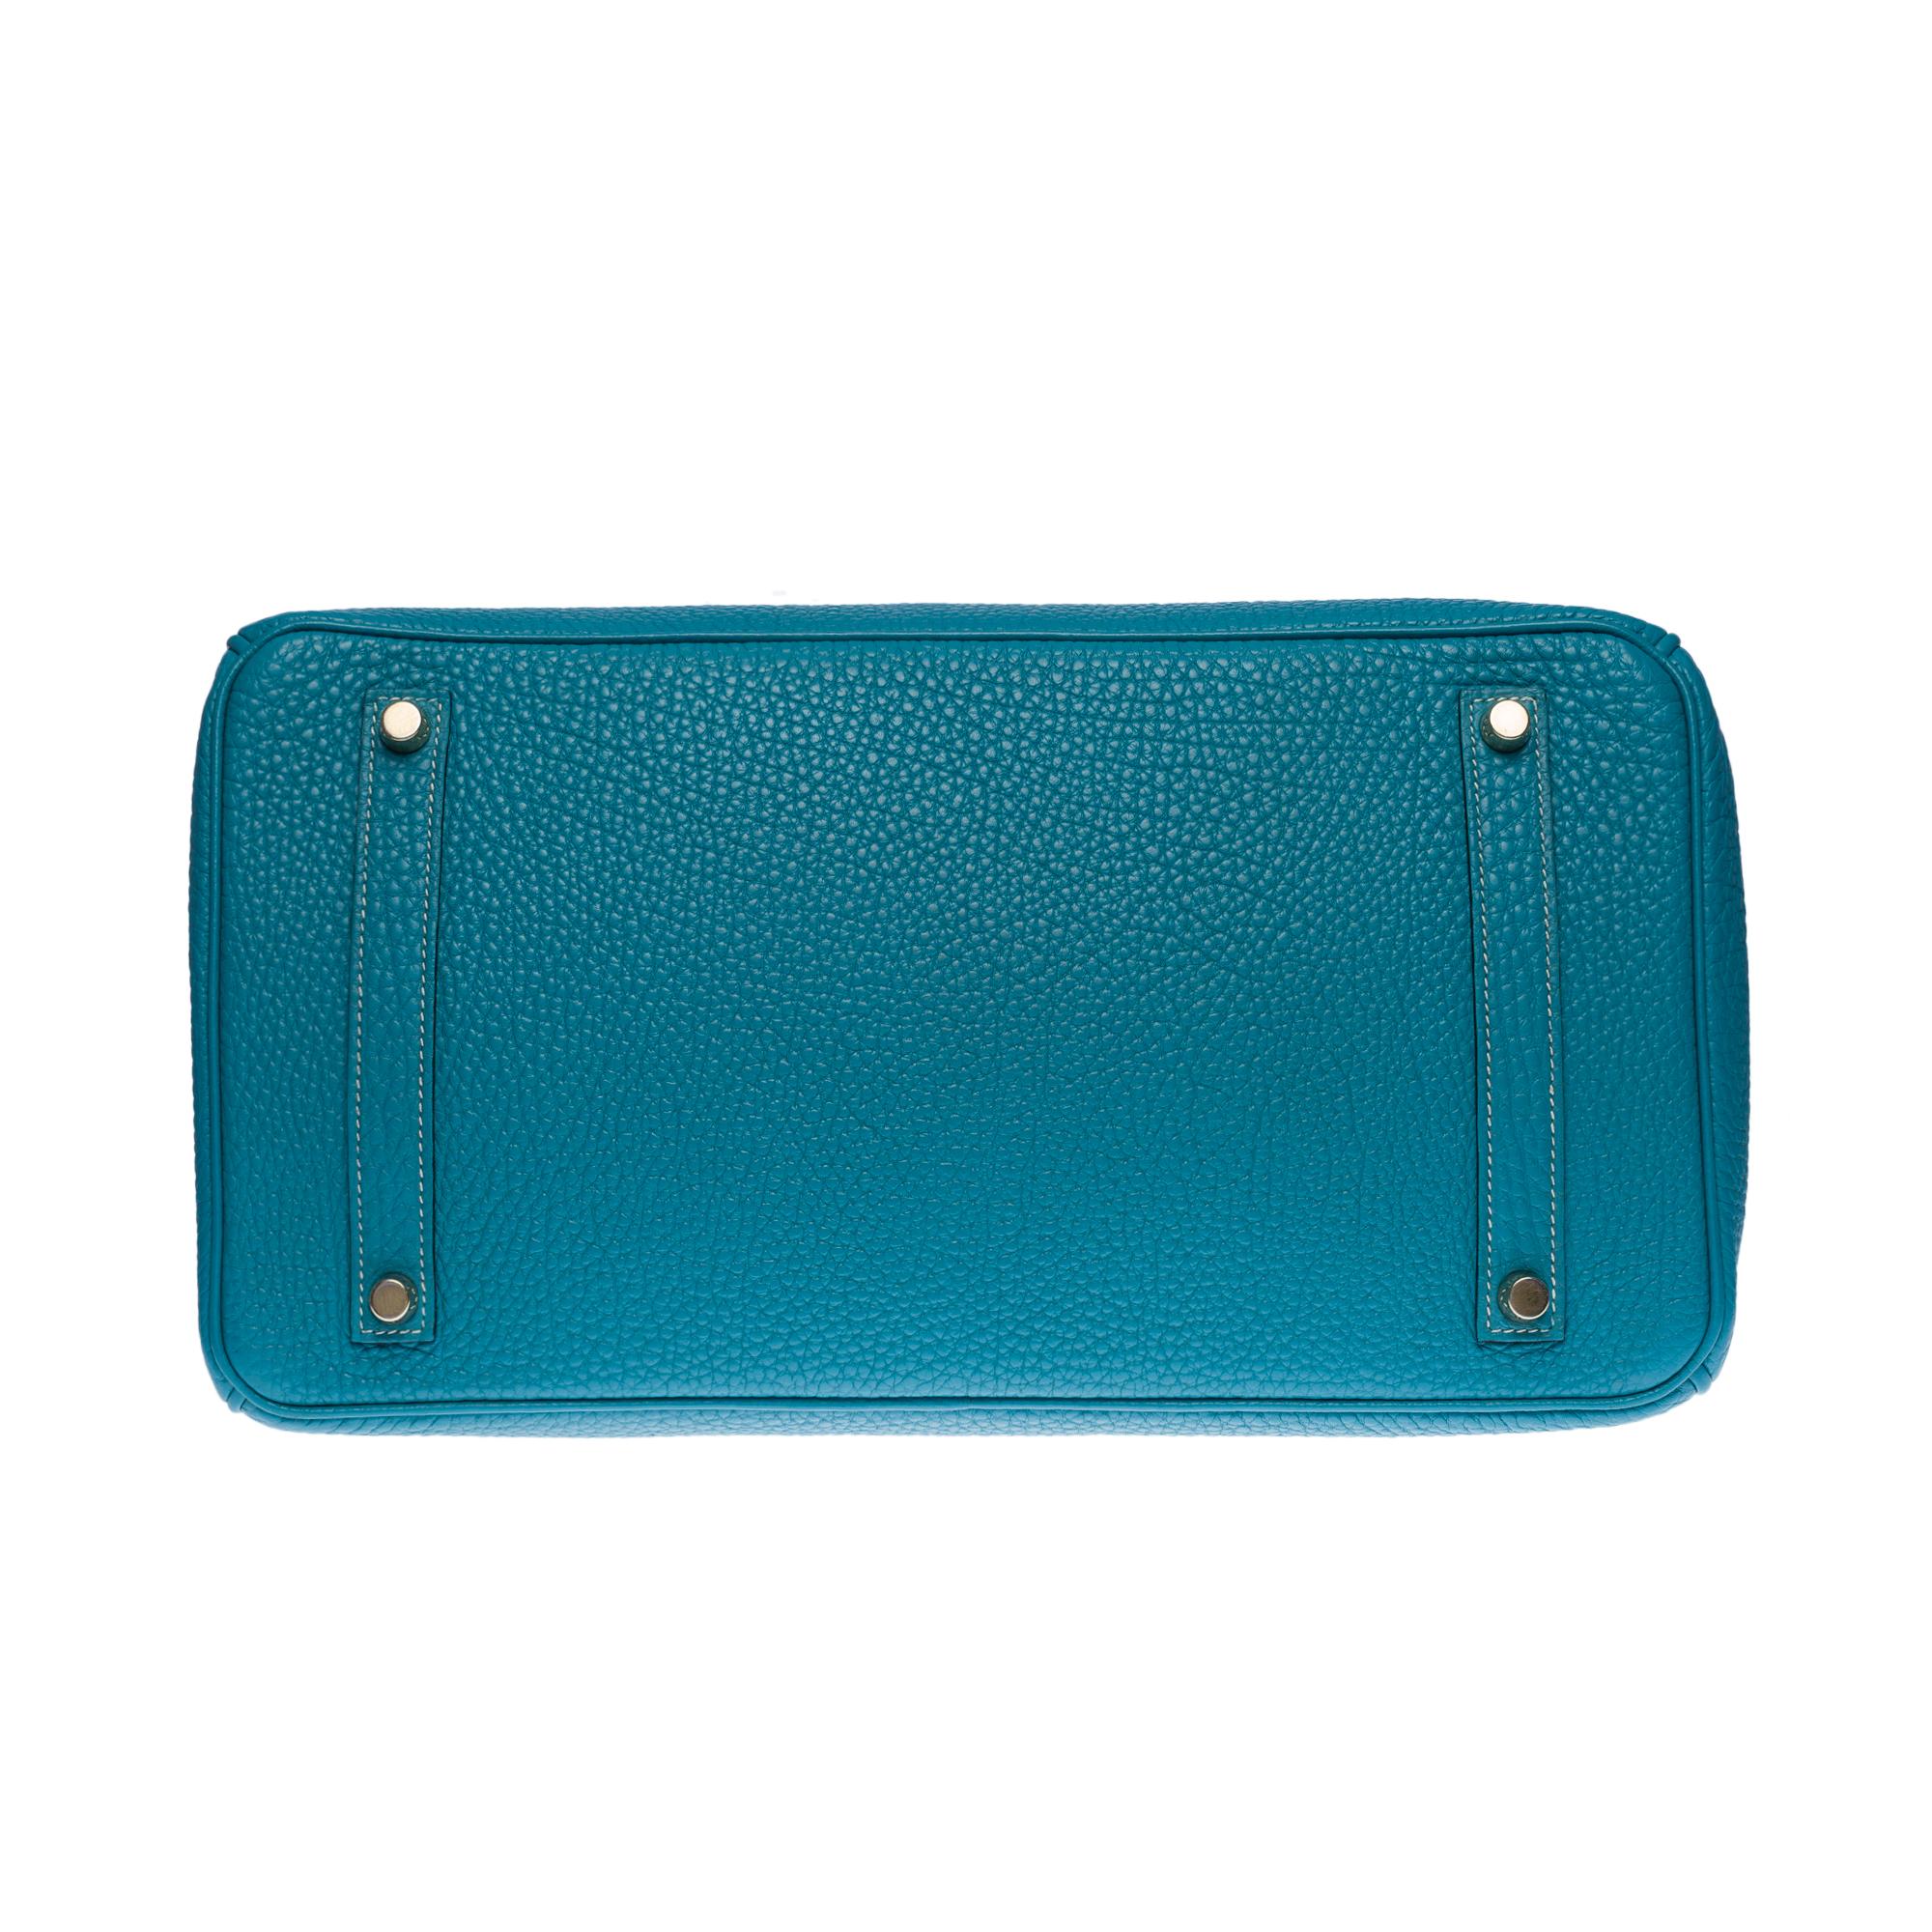 Magnificent Hermès Birkin 35 handbag in Bleu Saint-Cyr Togo leather, GHW 4